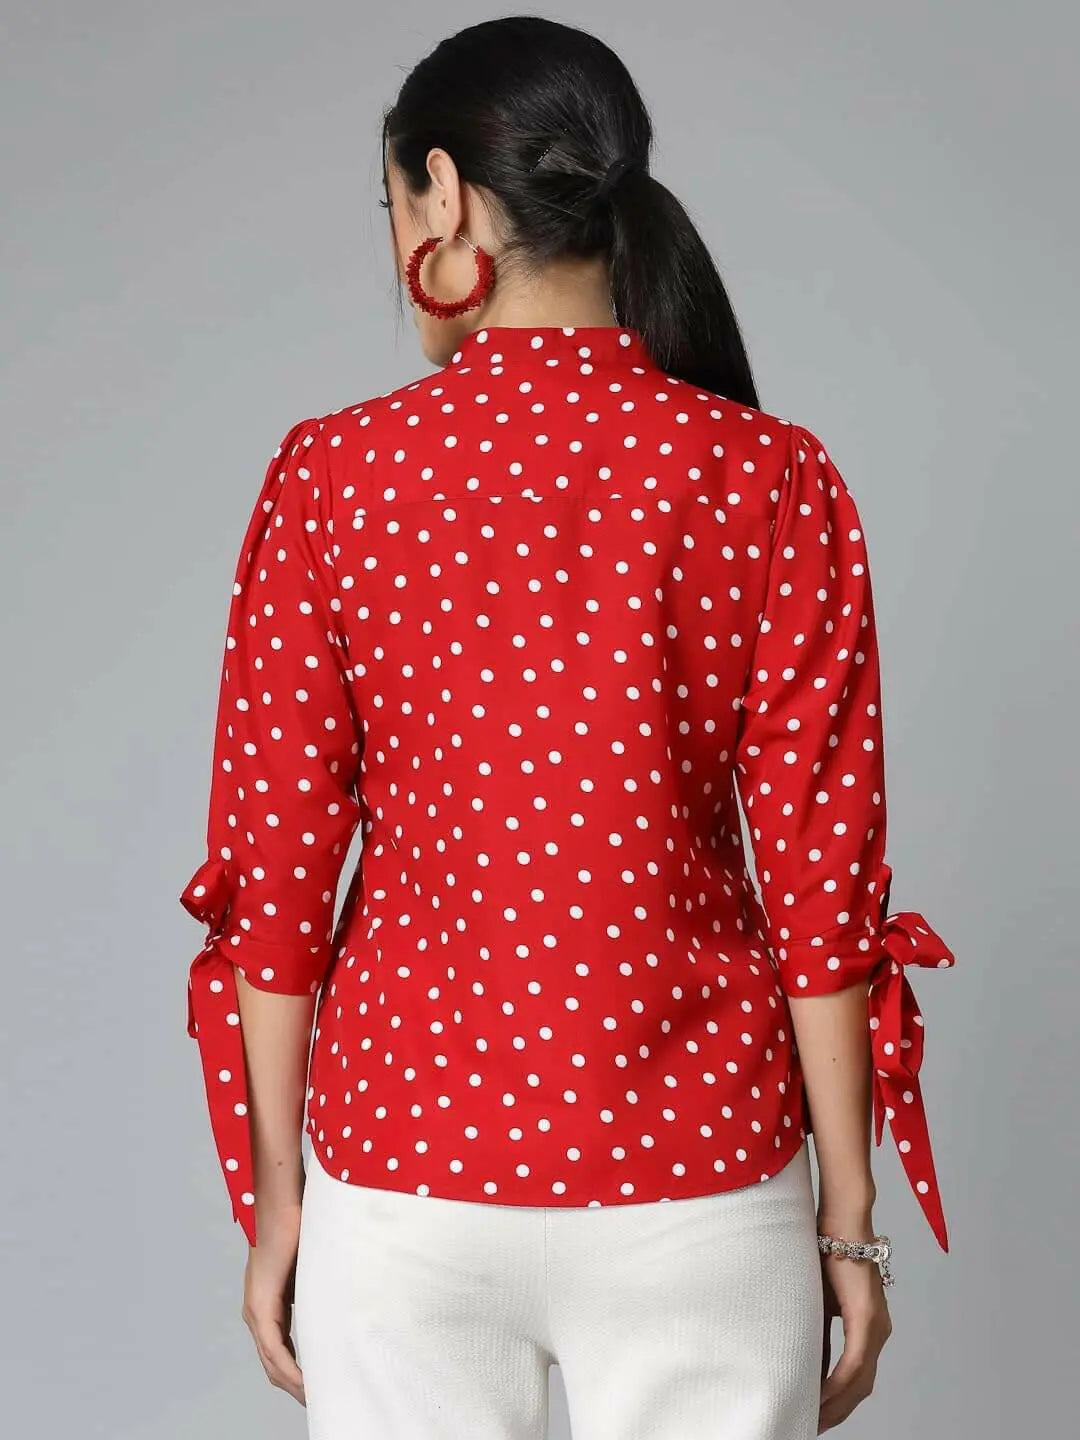 Krave Women Smart Casual Polka Printed Shirt, Polka Dot Blouse